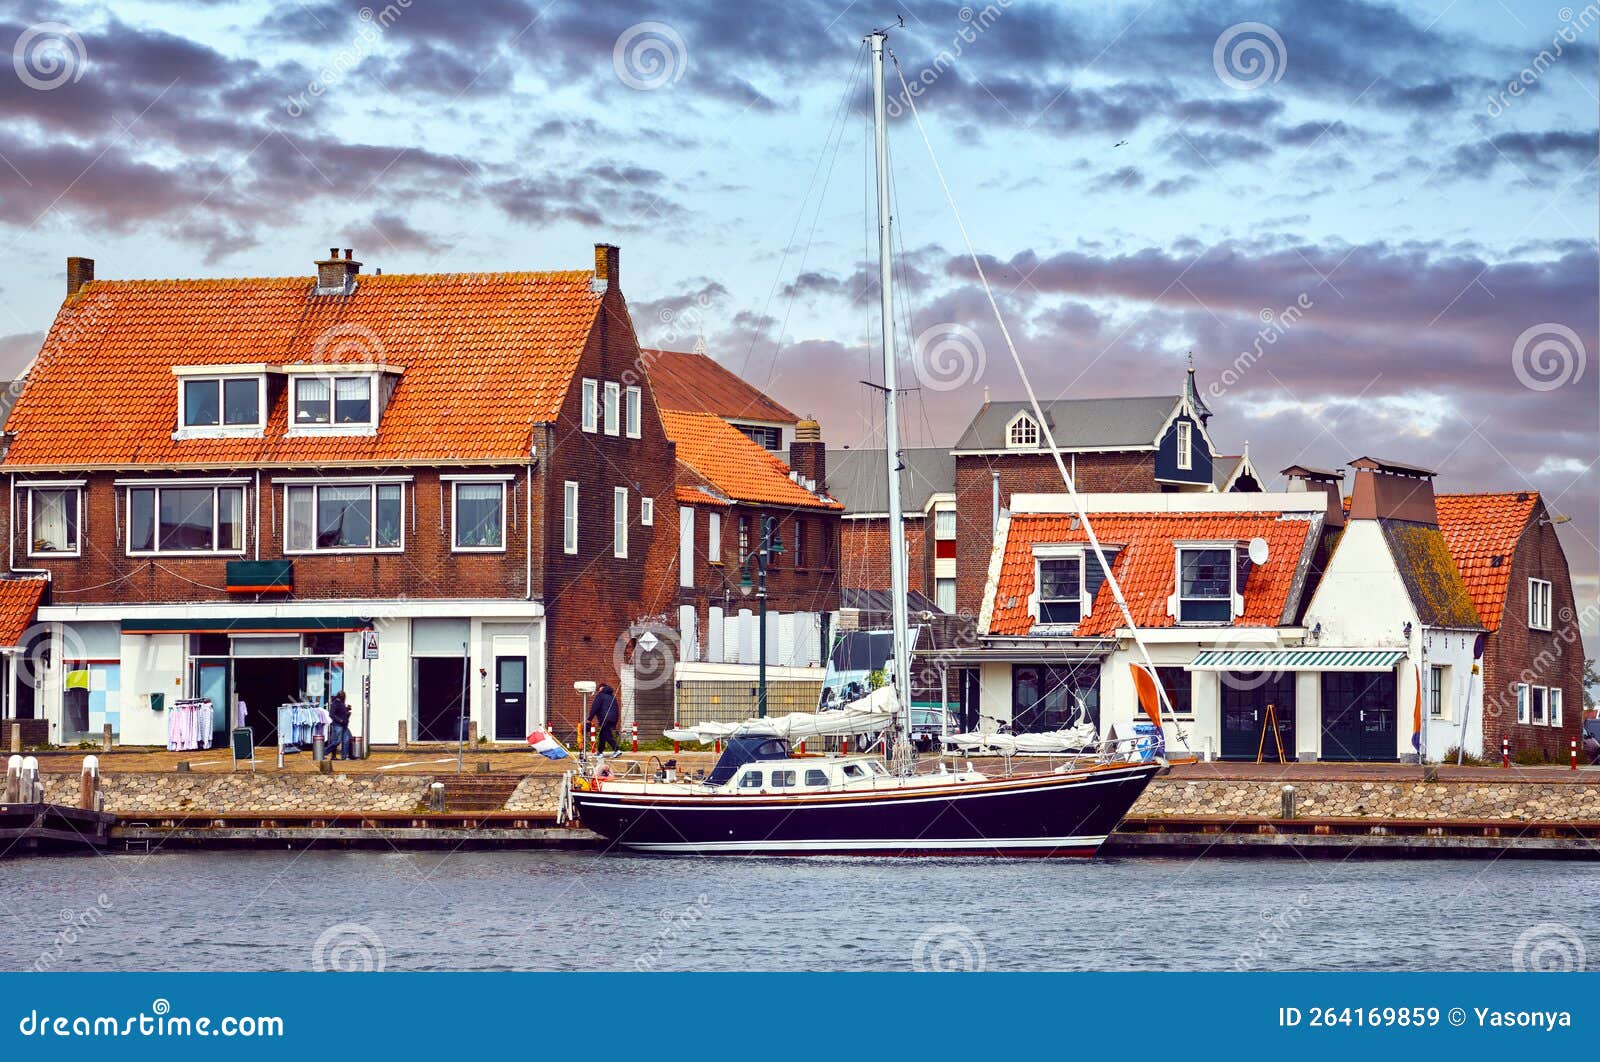 volendam, amsterdam, netherlands. luxury yachts by piers. sea